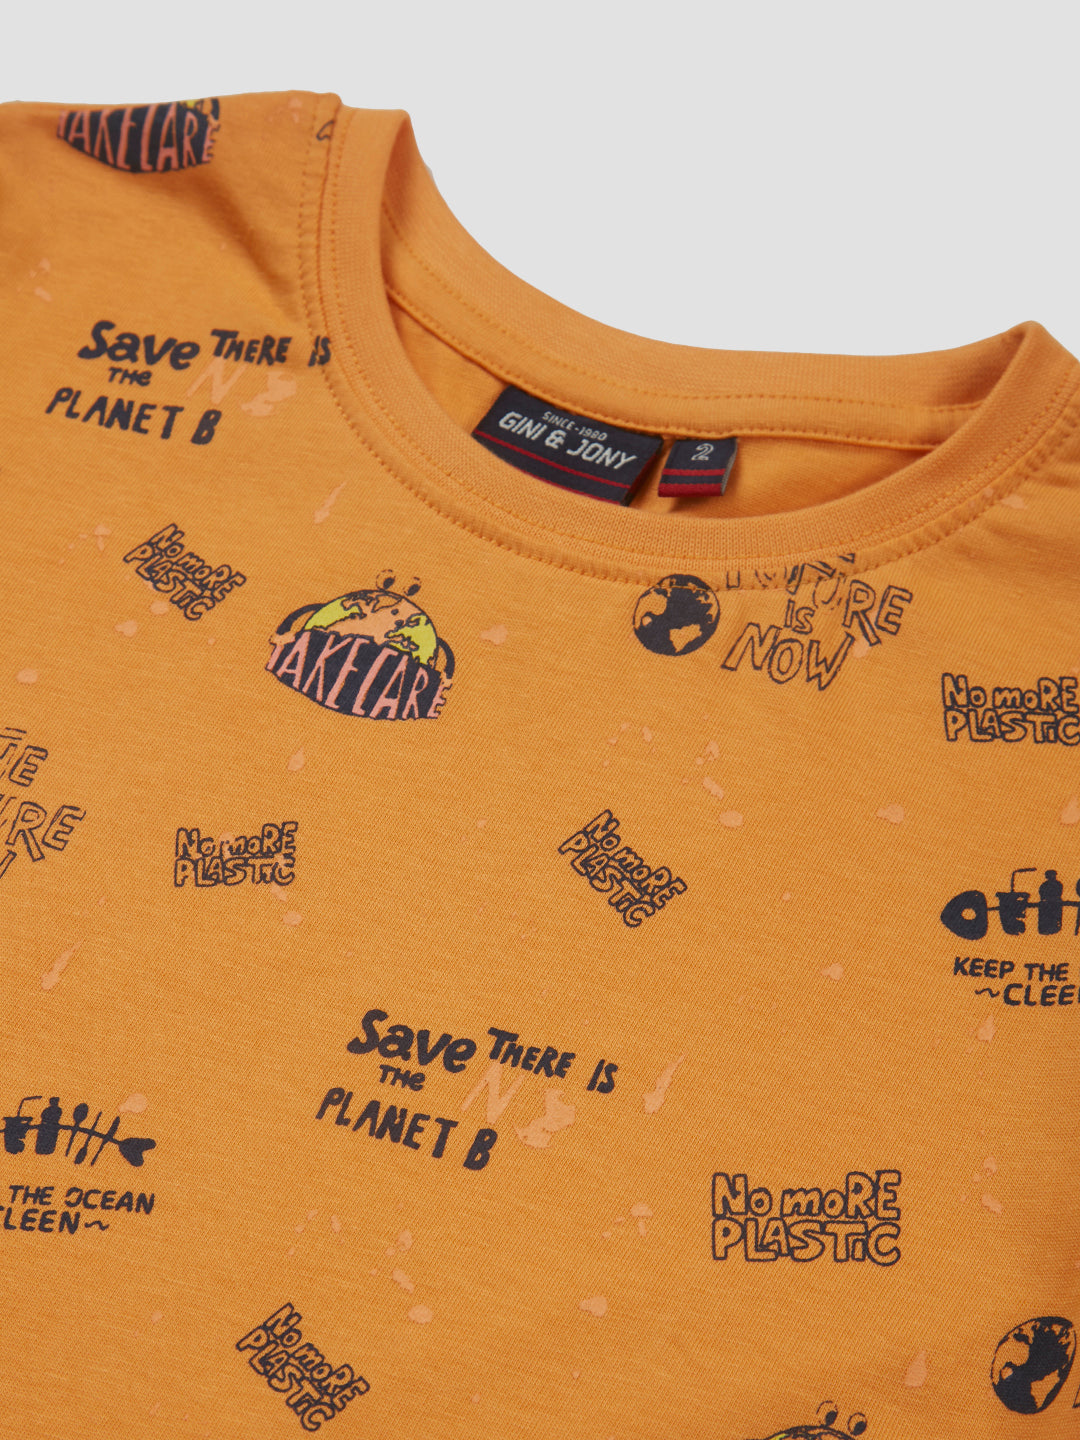 Boys Orange Printed Cotton T-Shirt